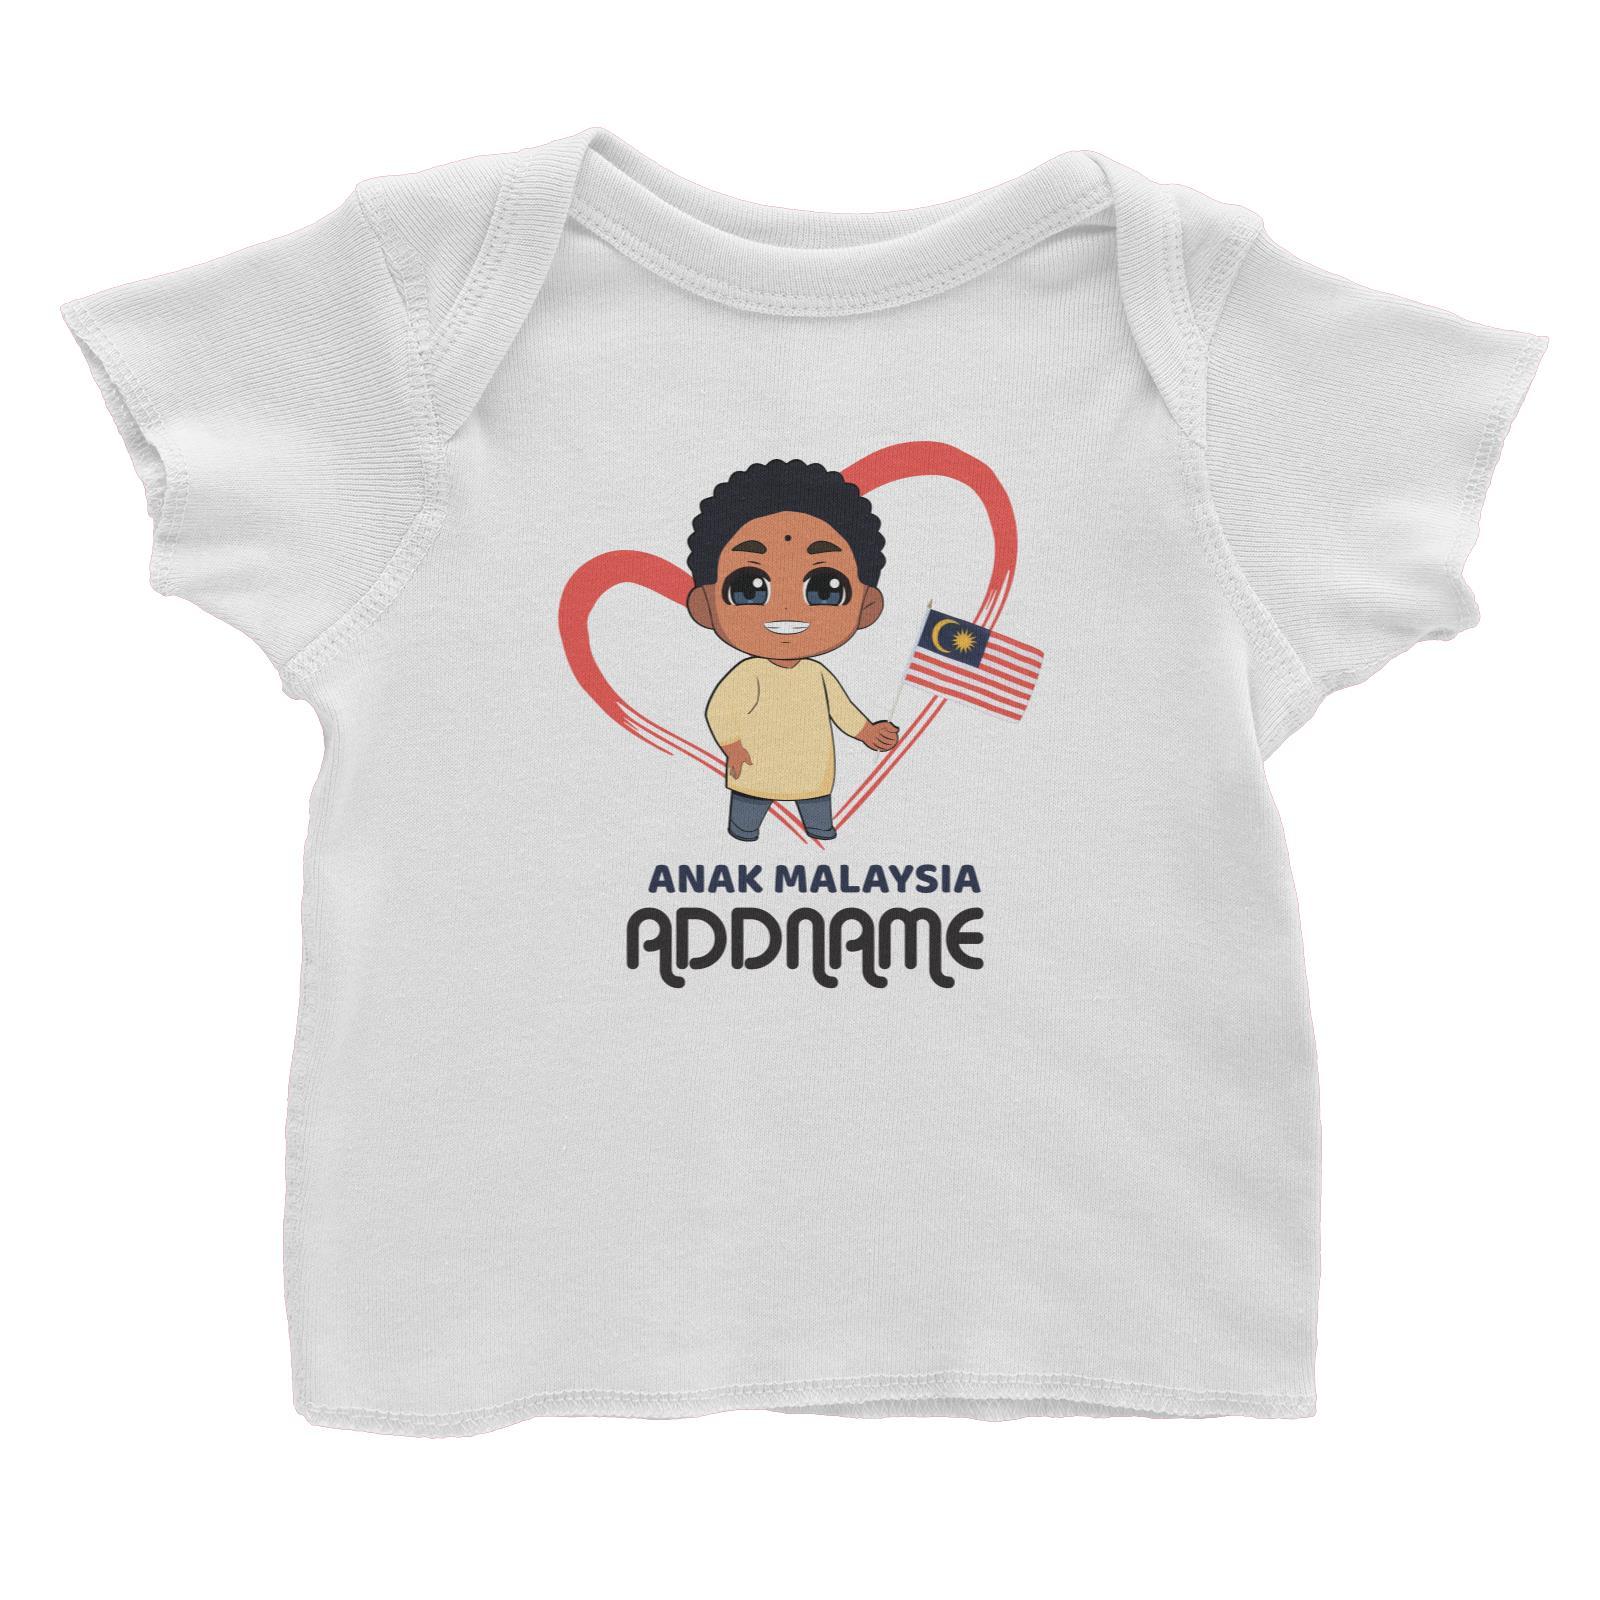 Merdeka Series Anak Malaysia Love Indian Boy Addname Baby T-Shirt